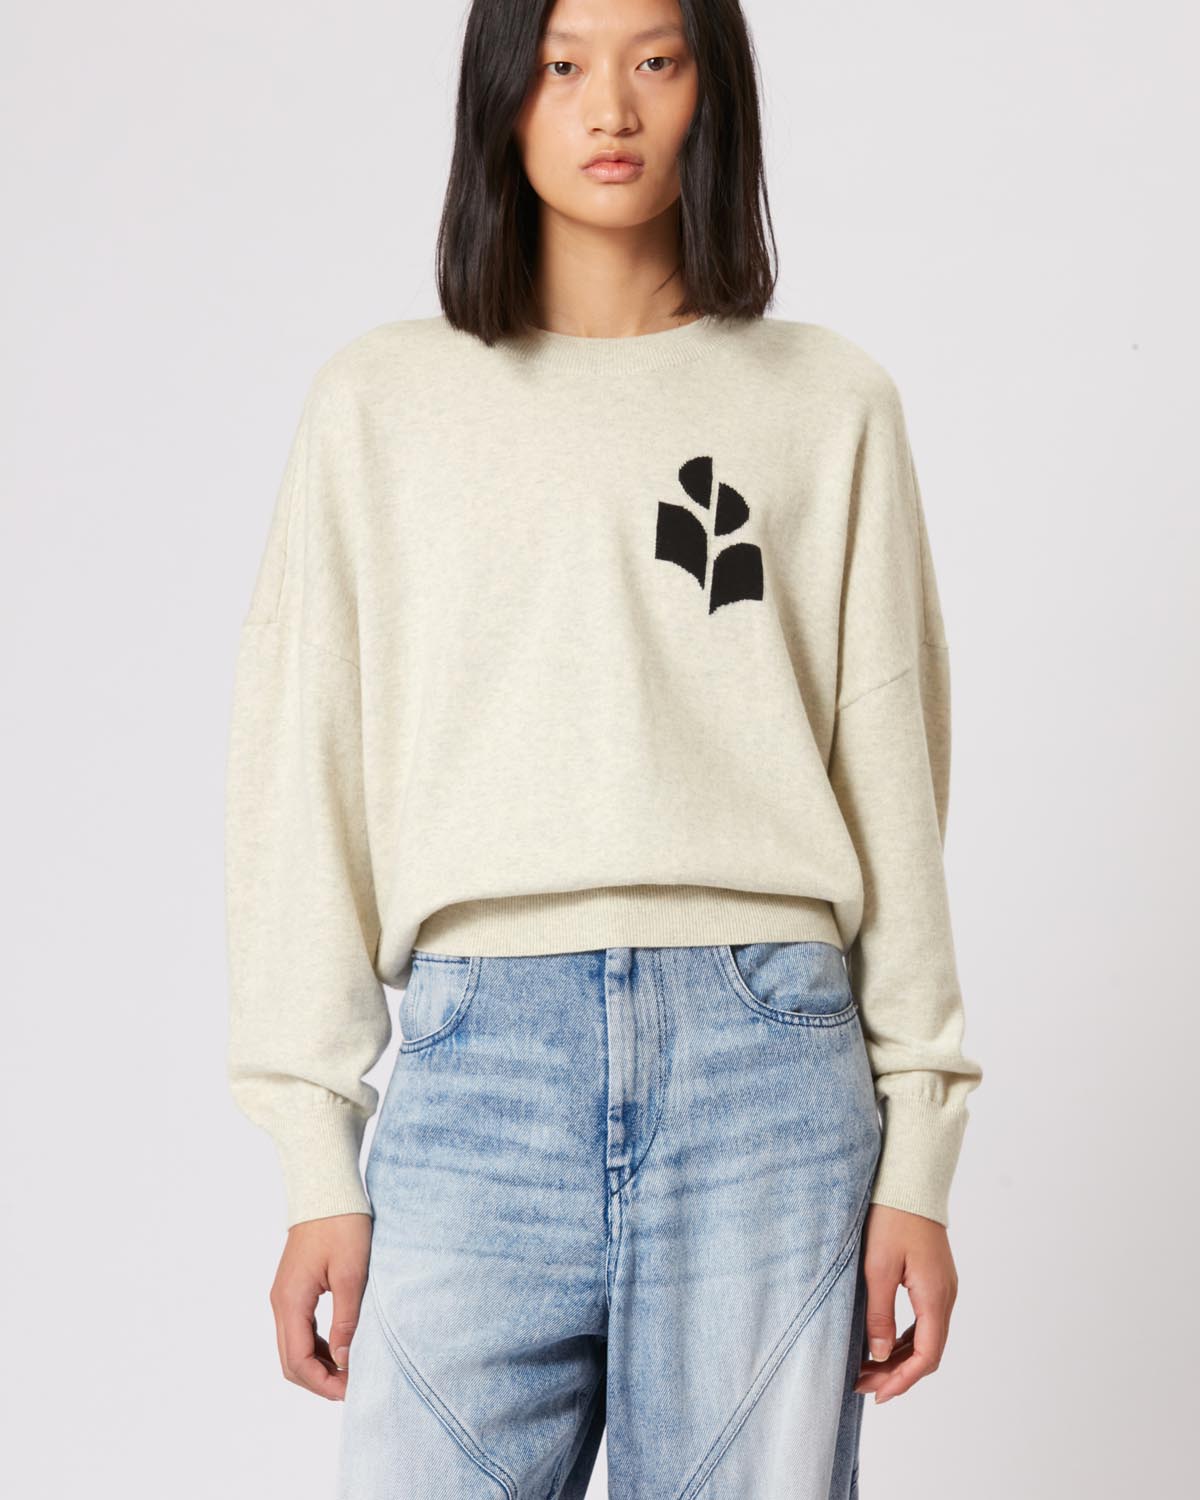 Marisans sweater Woman Light gray 4